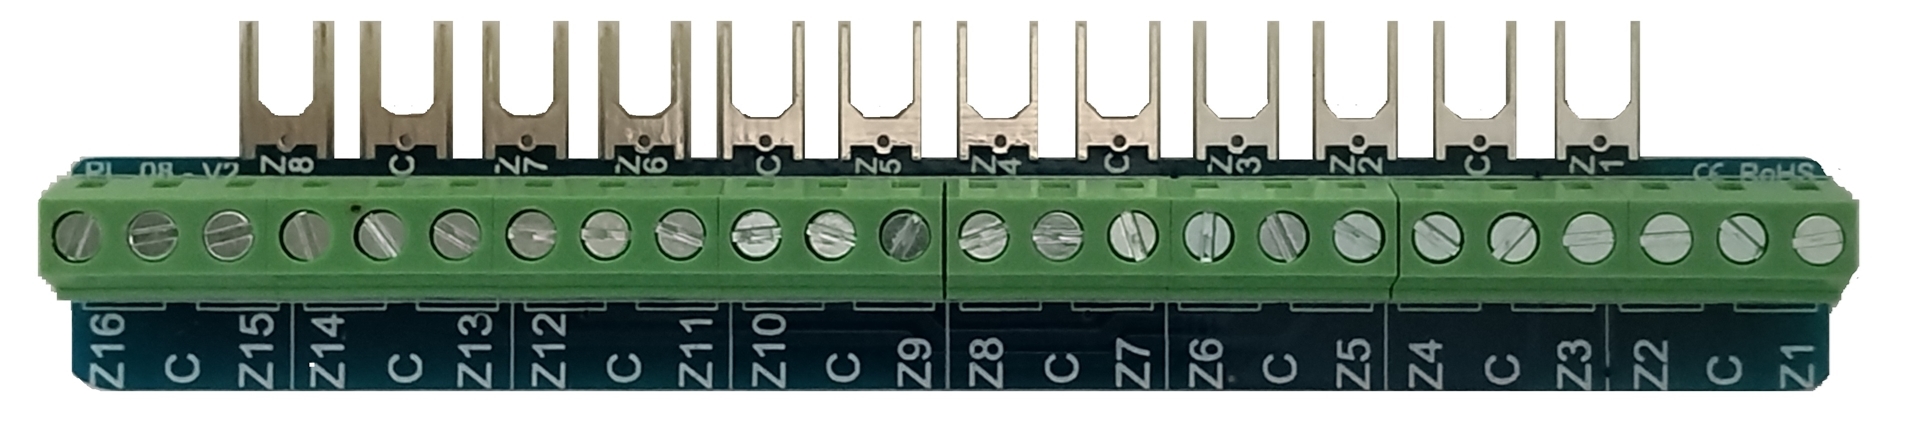 Picture of Πλακέτα διπλασιασμού ζωνών NXG-8 Caddx